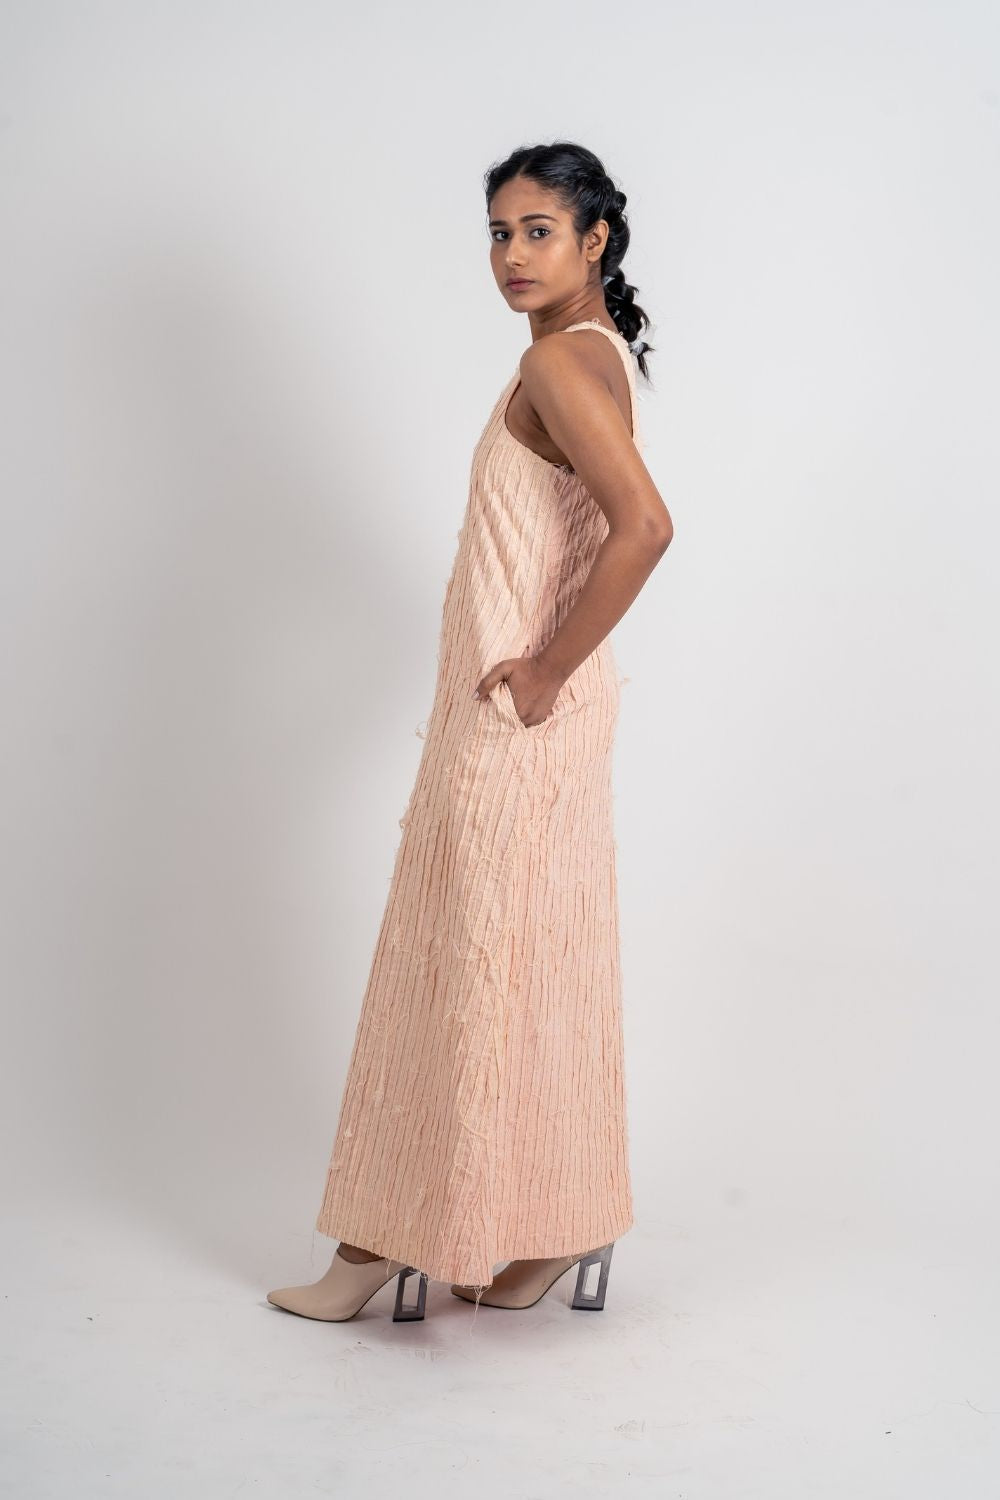 Pink Textured Halter Dress Dresses Handloom Cotton, Maxi Dresses, Natural, Pink, Relaxed Fit, Ahmev Kamakhyaa